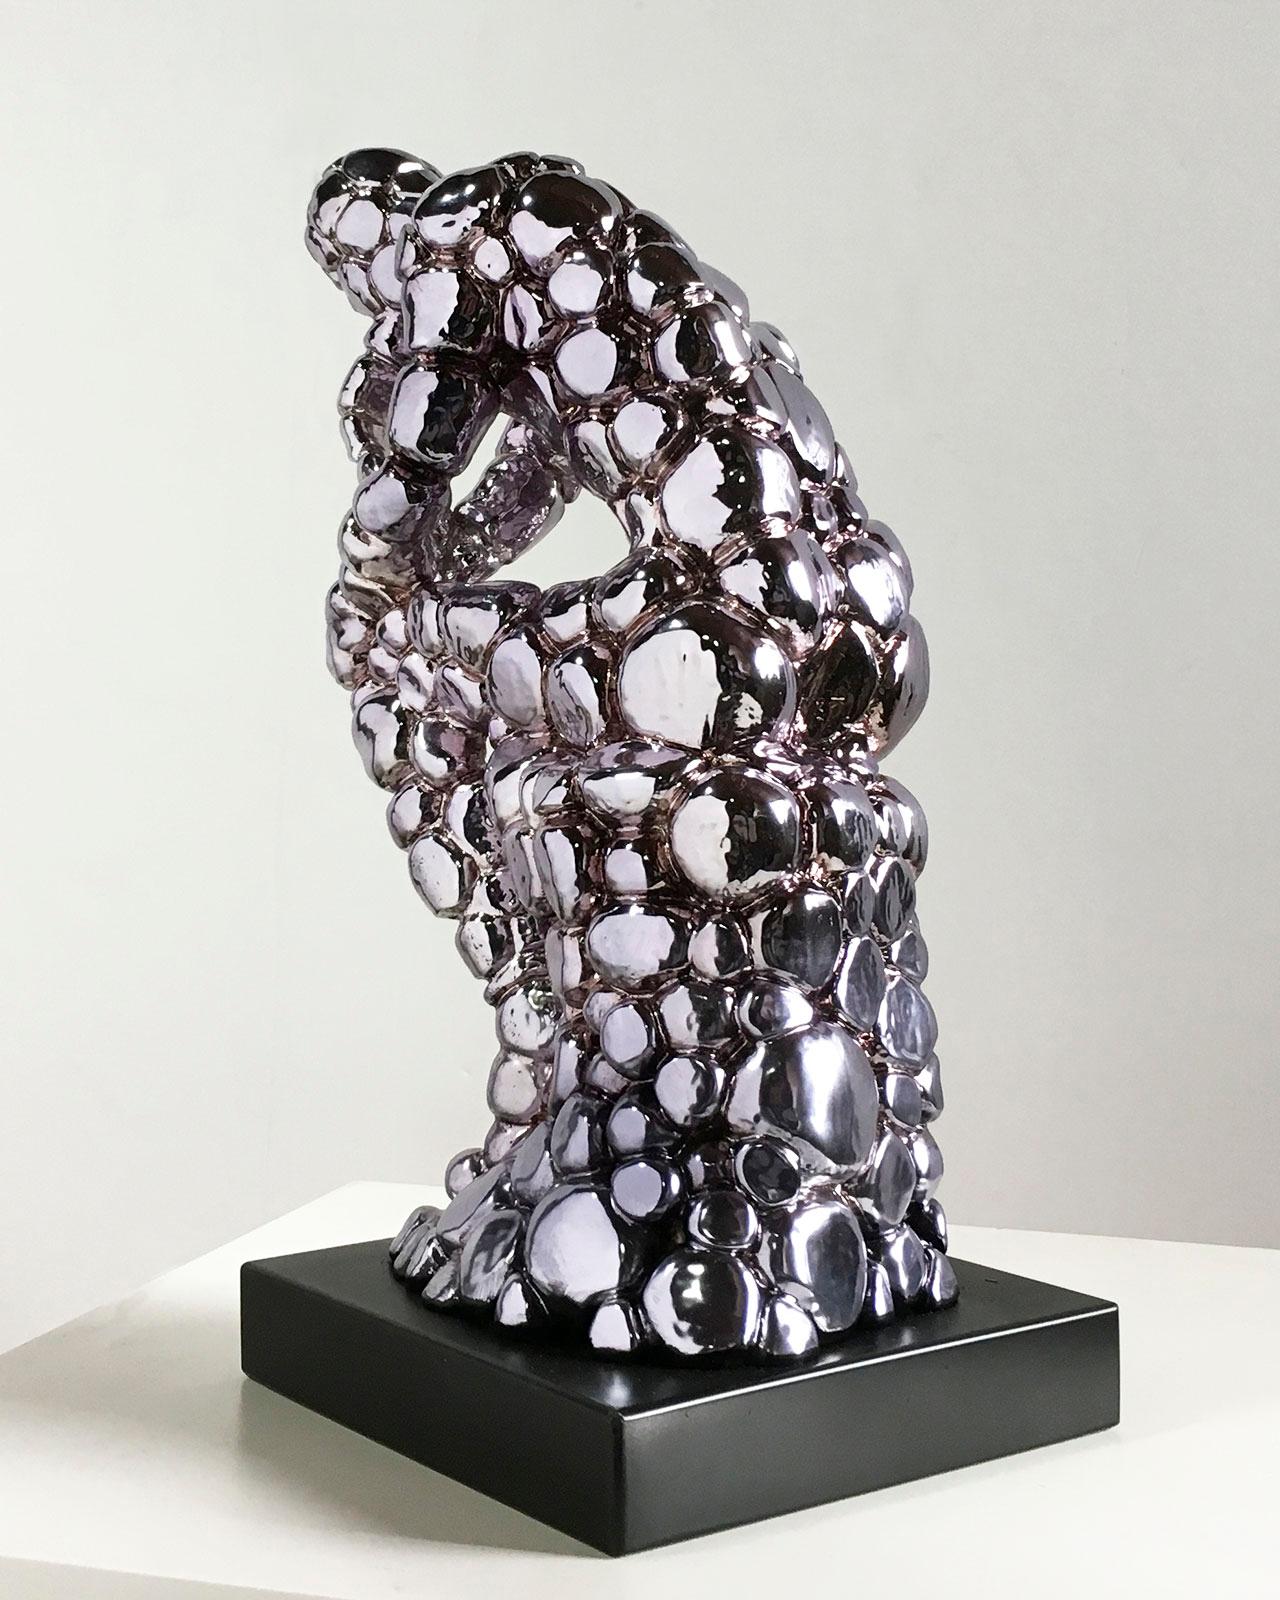 Thinker Rodin as an excuse Nickel - Miguel Guía, Pop Art, Nickel layer Sculpture 7